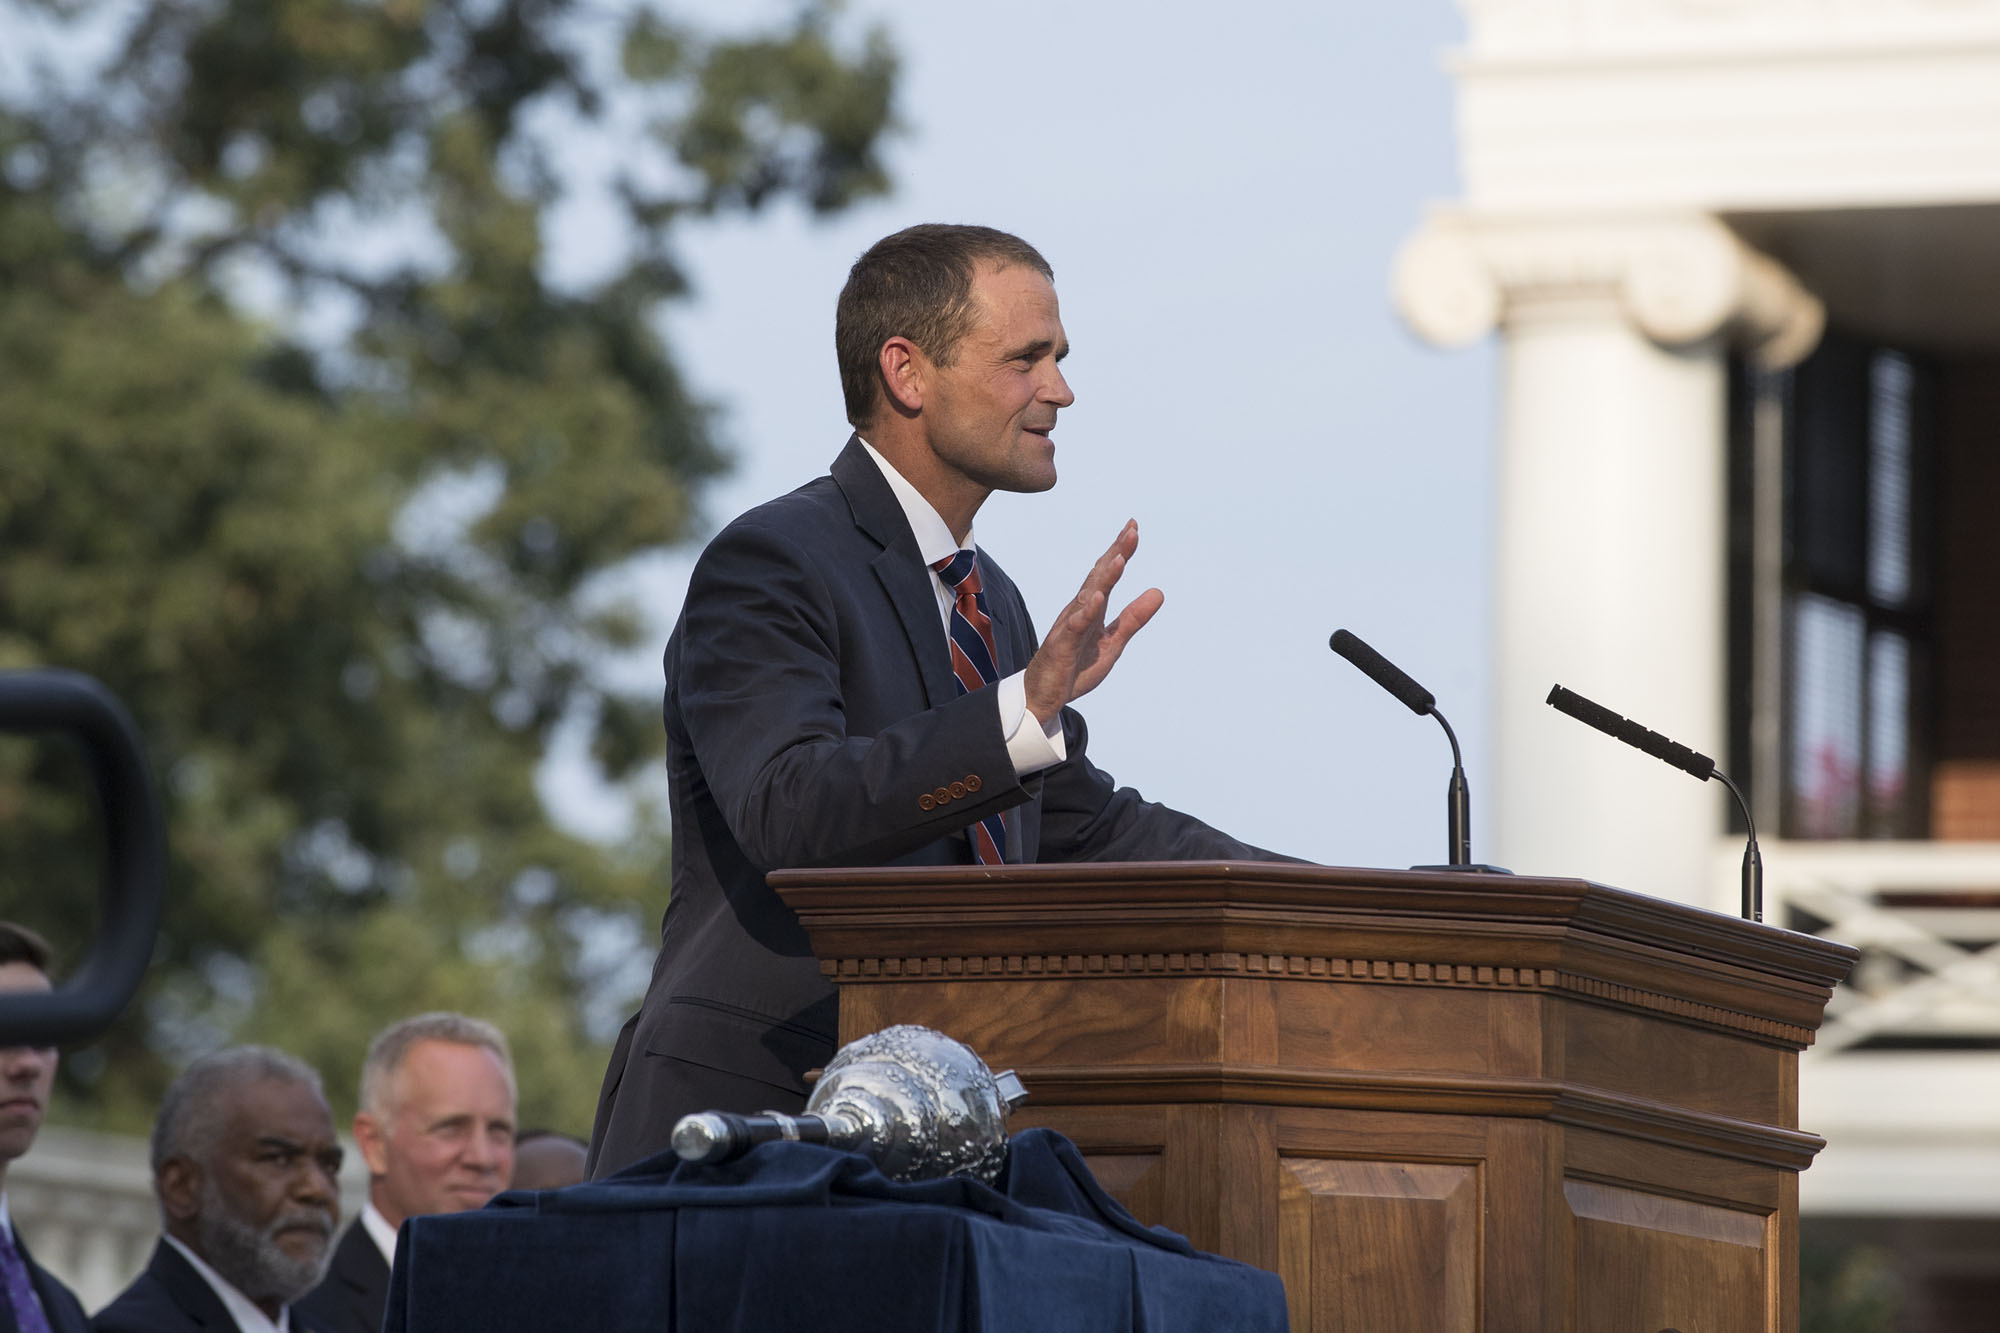 President Jim Ryan standing at a podium giving a speech